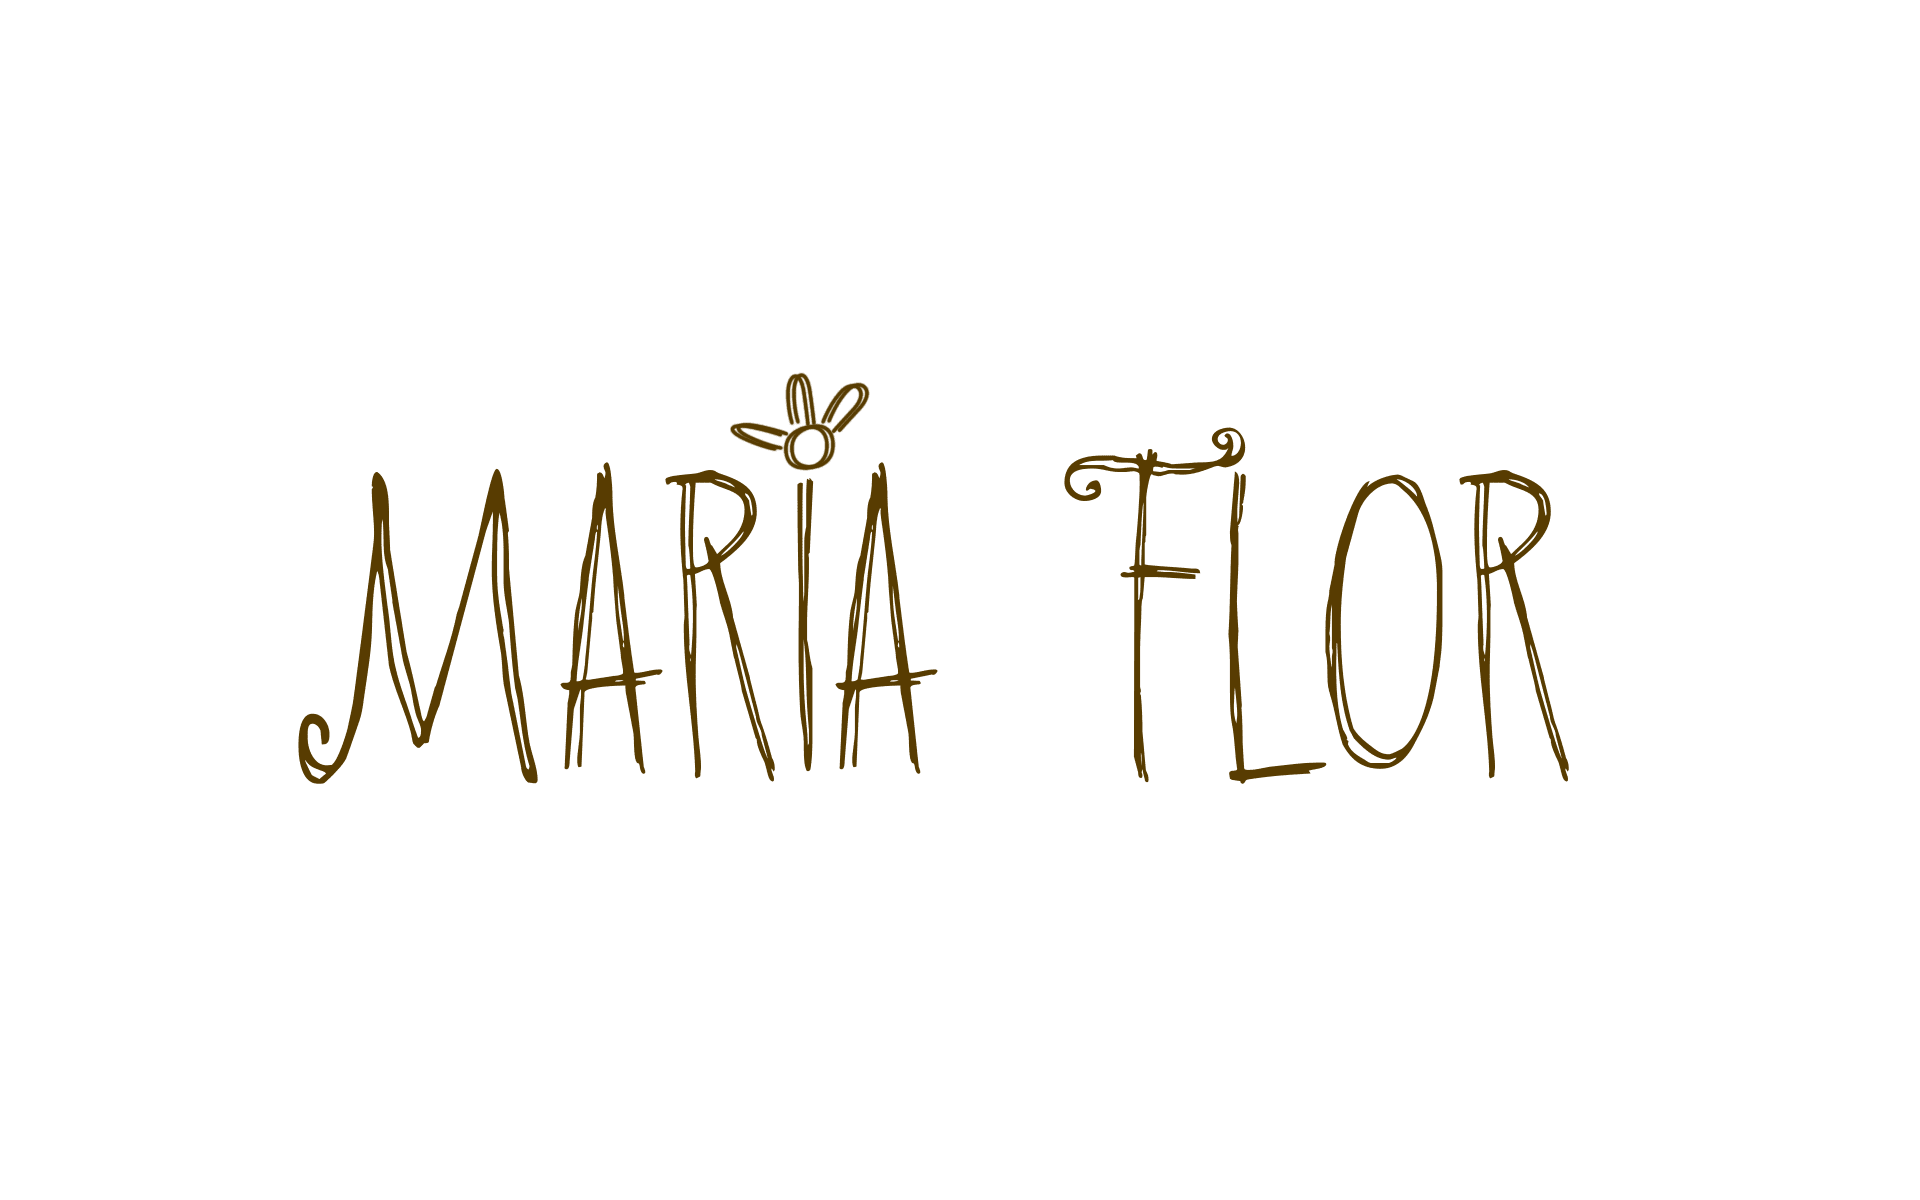 download hotel flor de maria